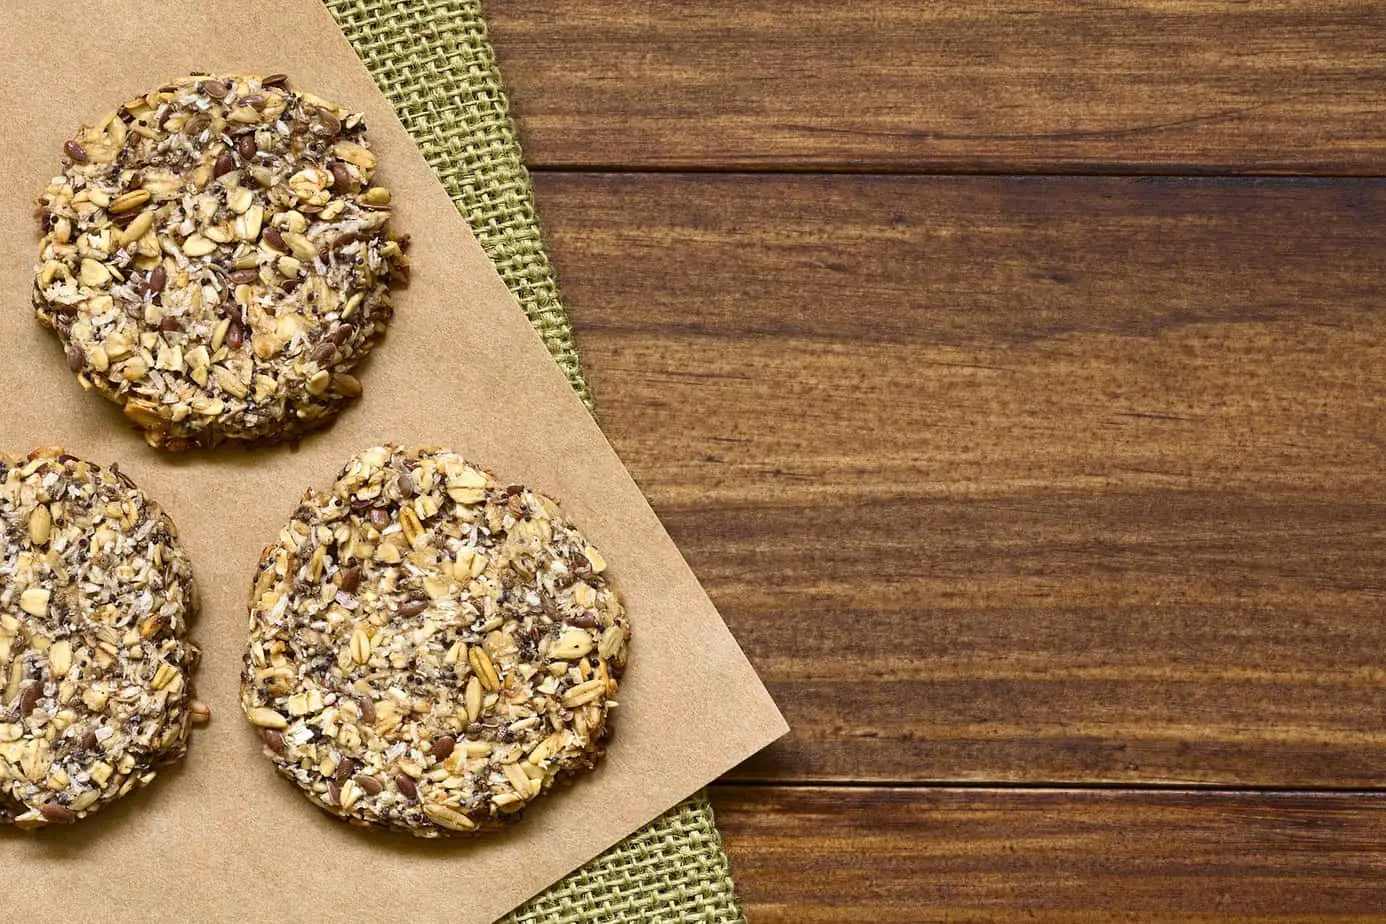 Vegan cookies made of banana oatmeal